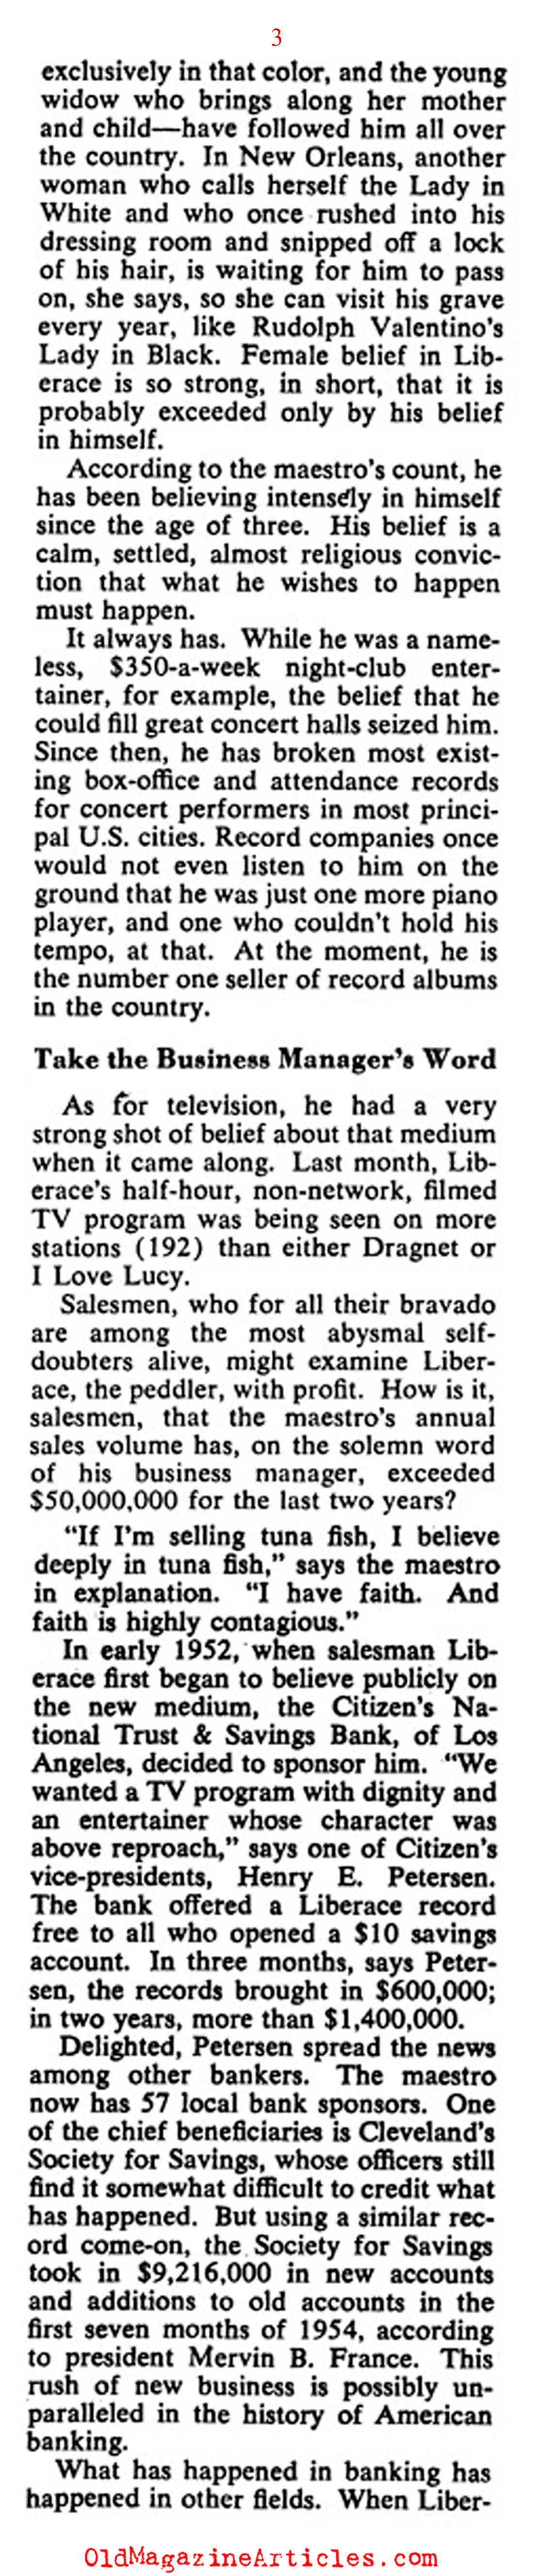 Liberace Arrives (Collier's Magazine, 1954)